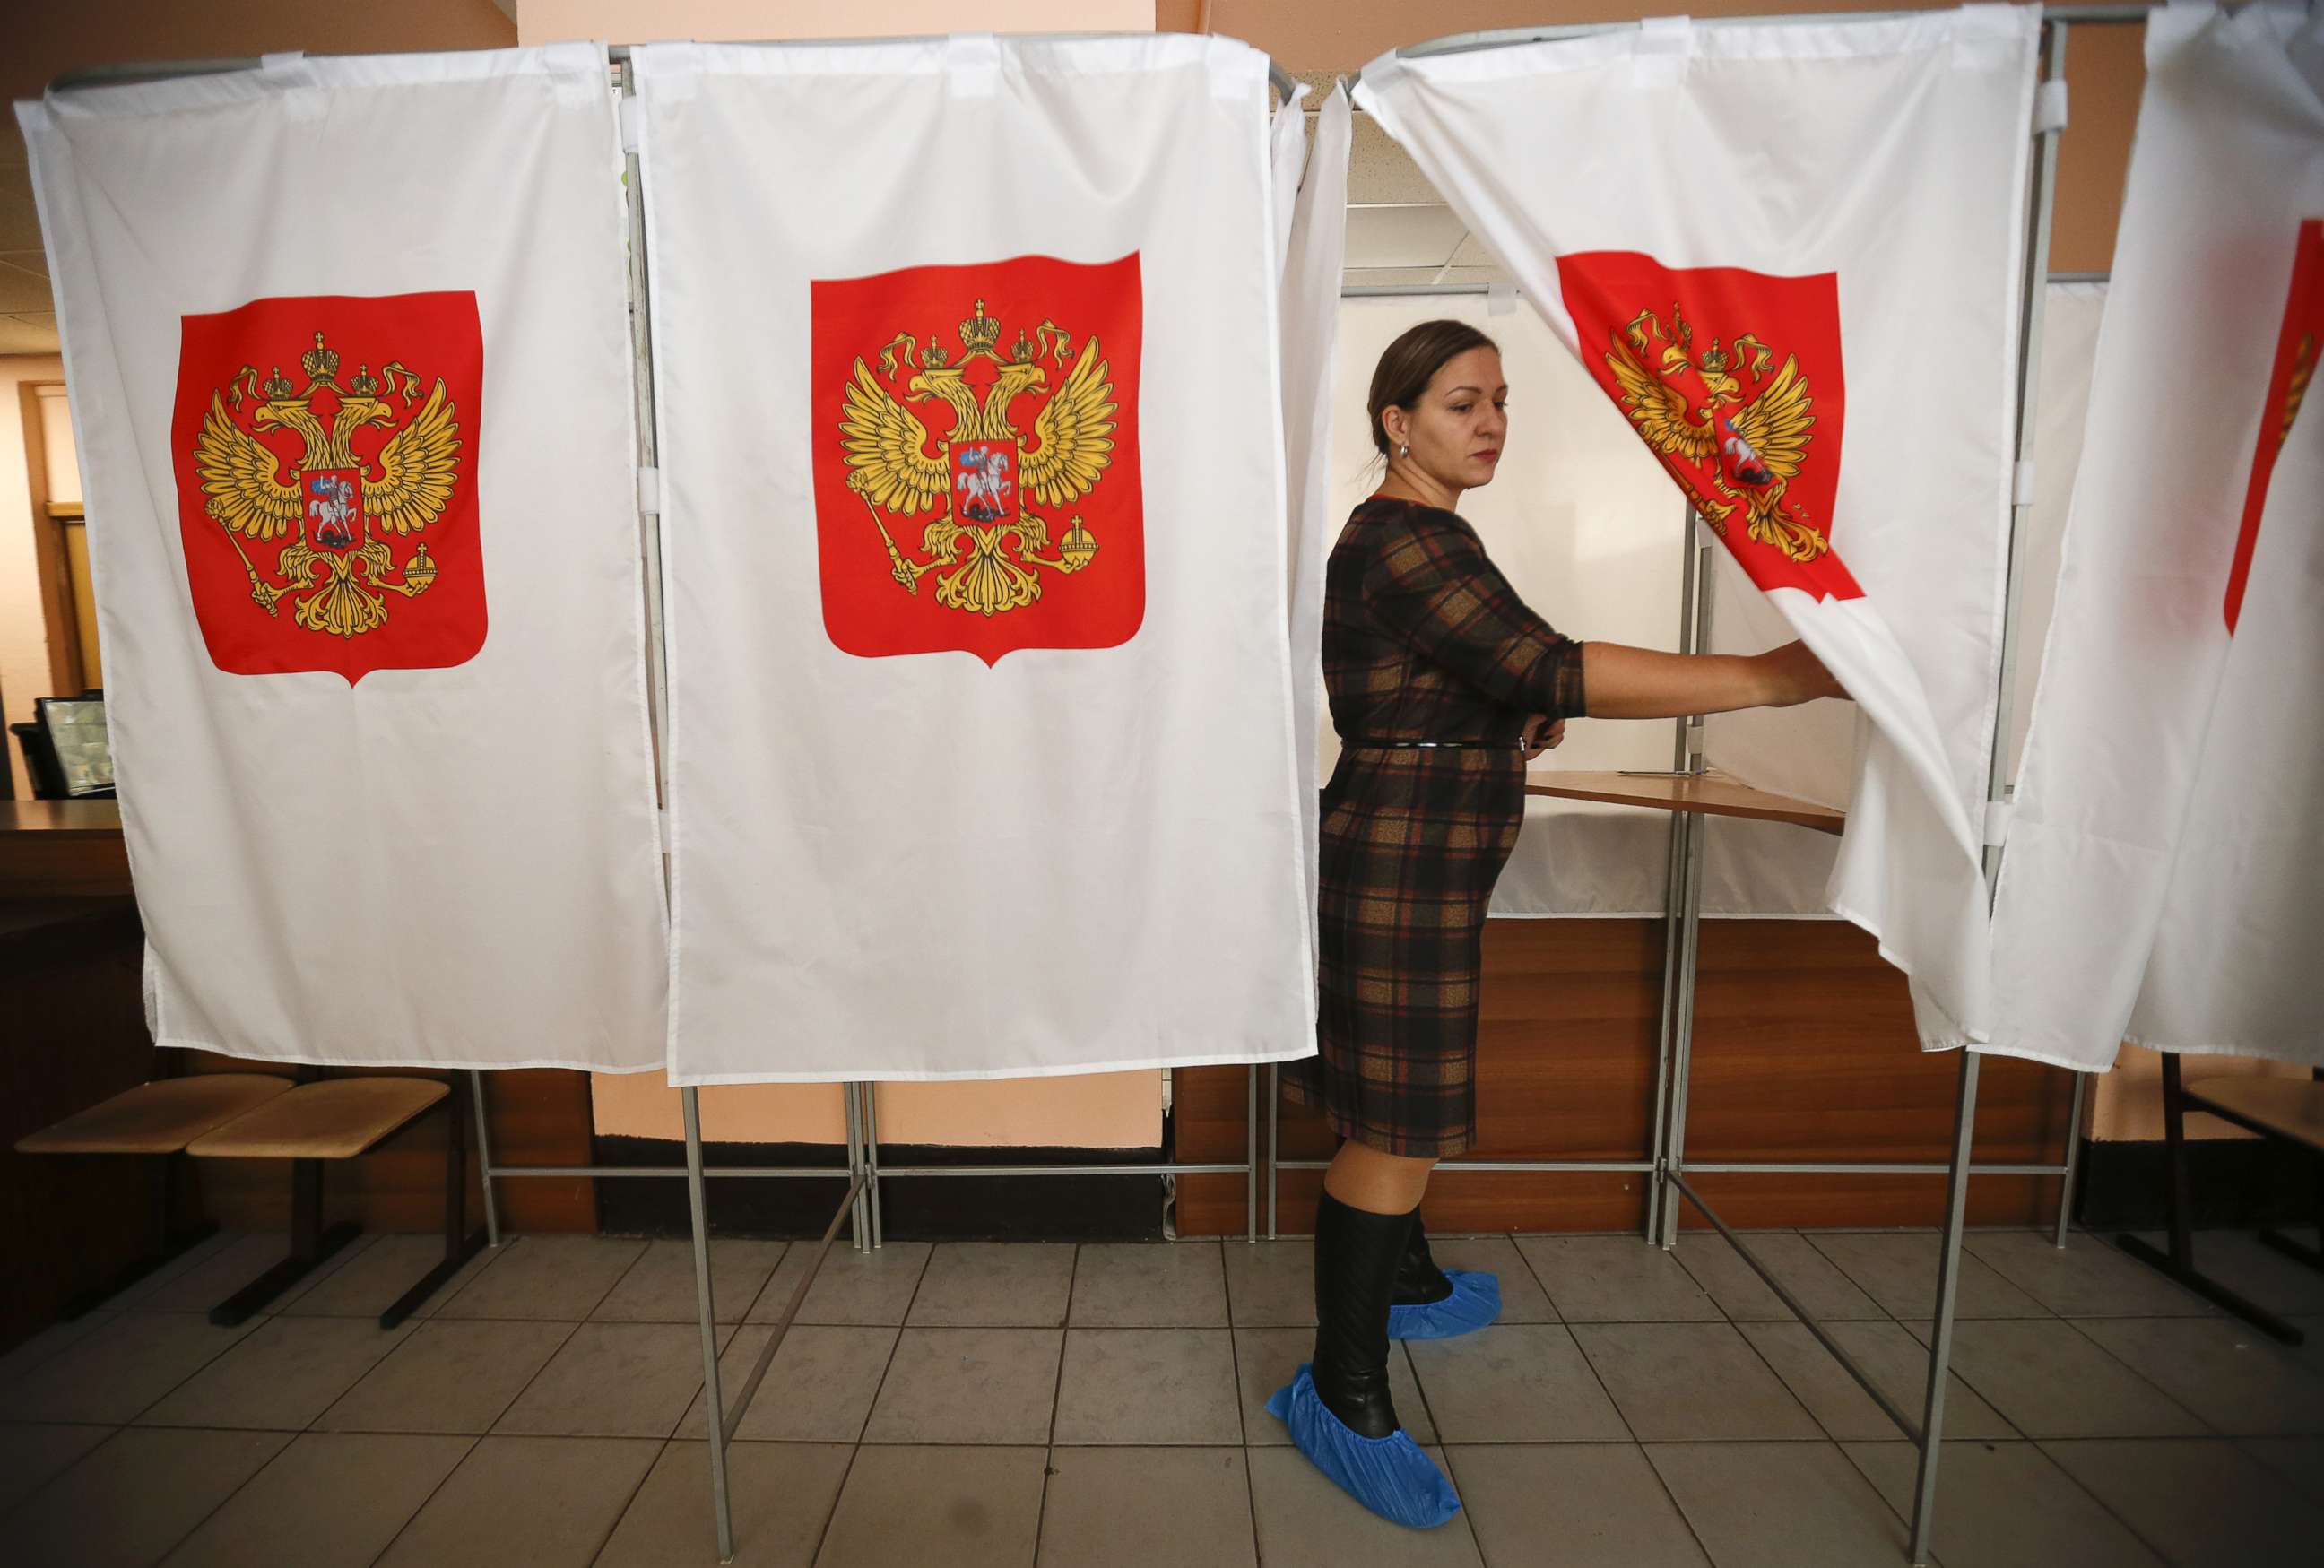 russia-polling-station-1-rt-jt-180317_hpMain.jpg